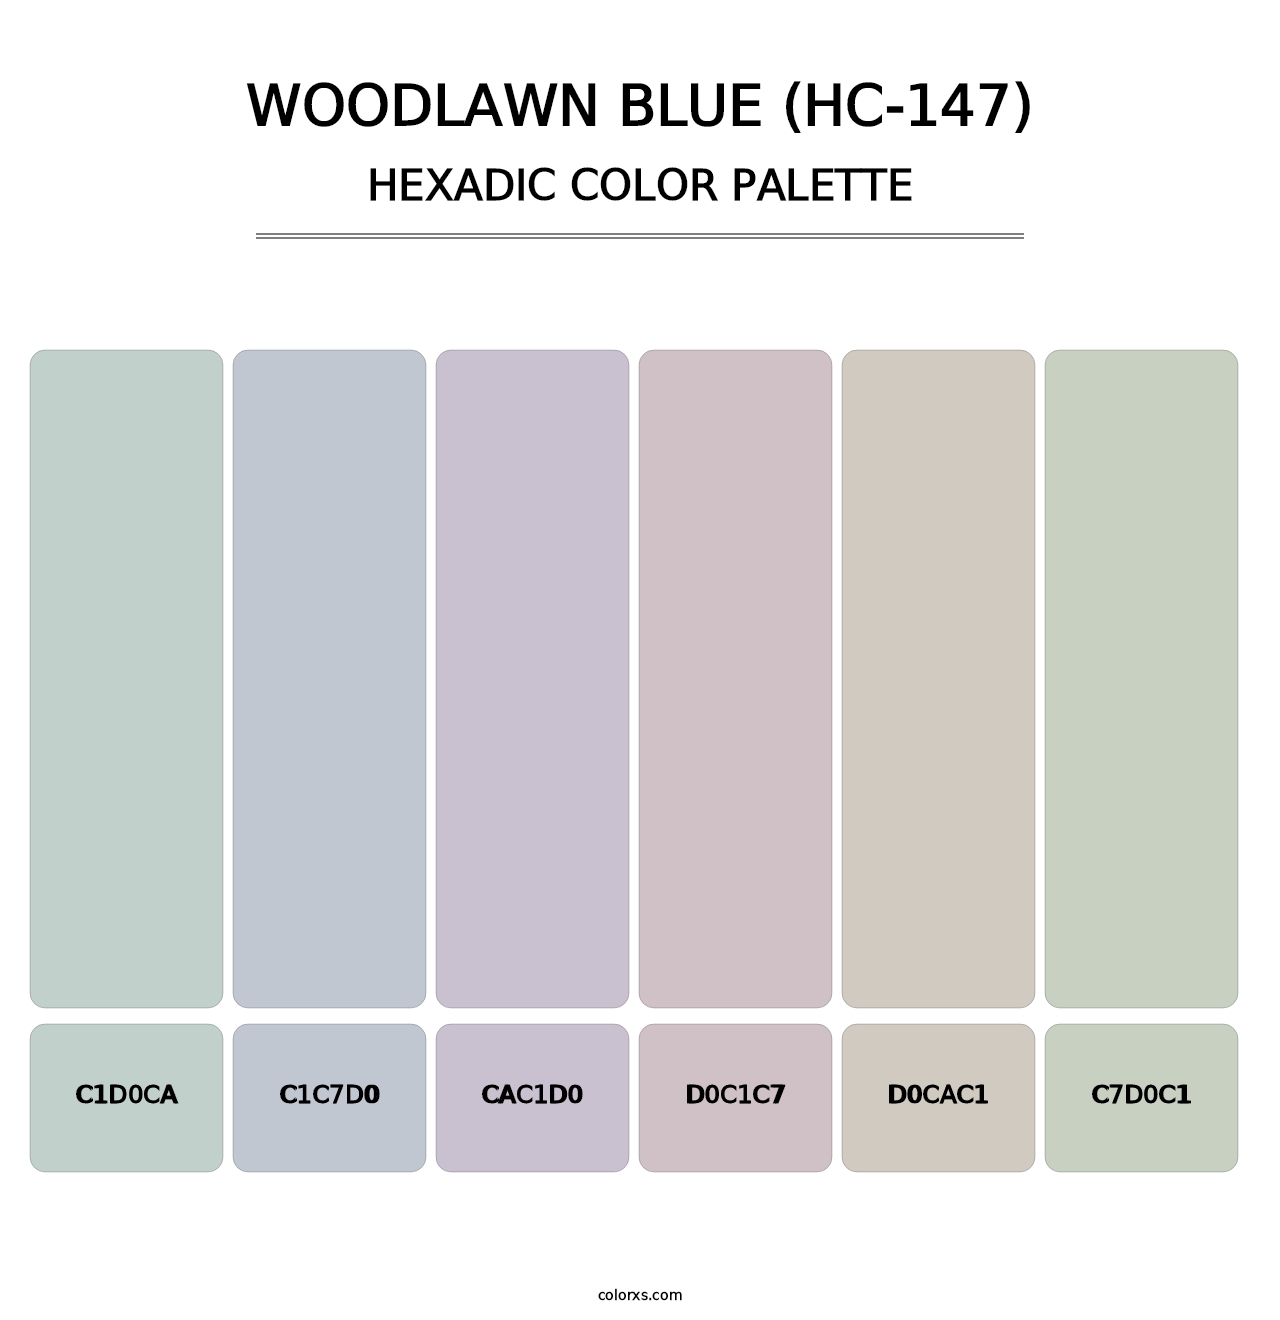 Woodlawn Blue (HC-147) - Hexadic Color Palette